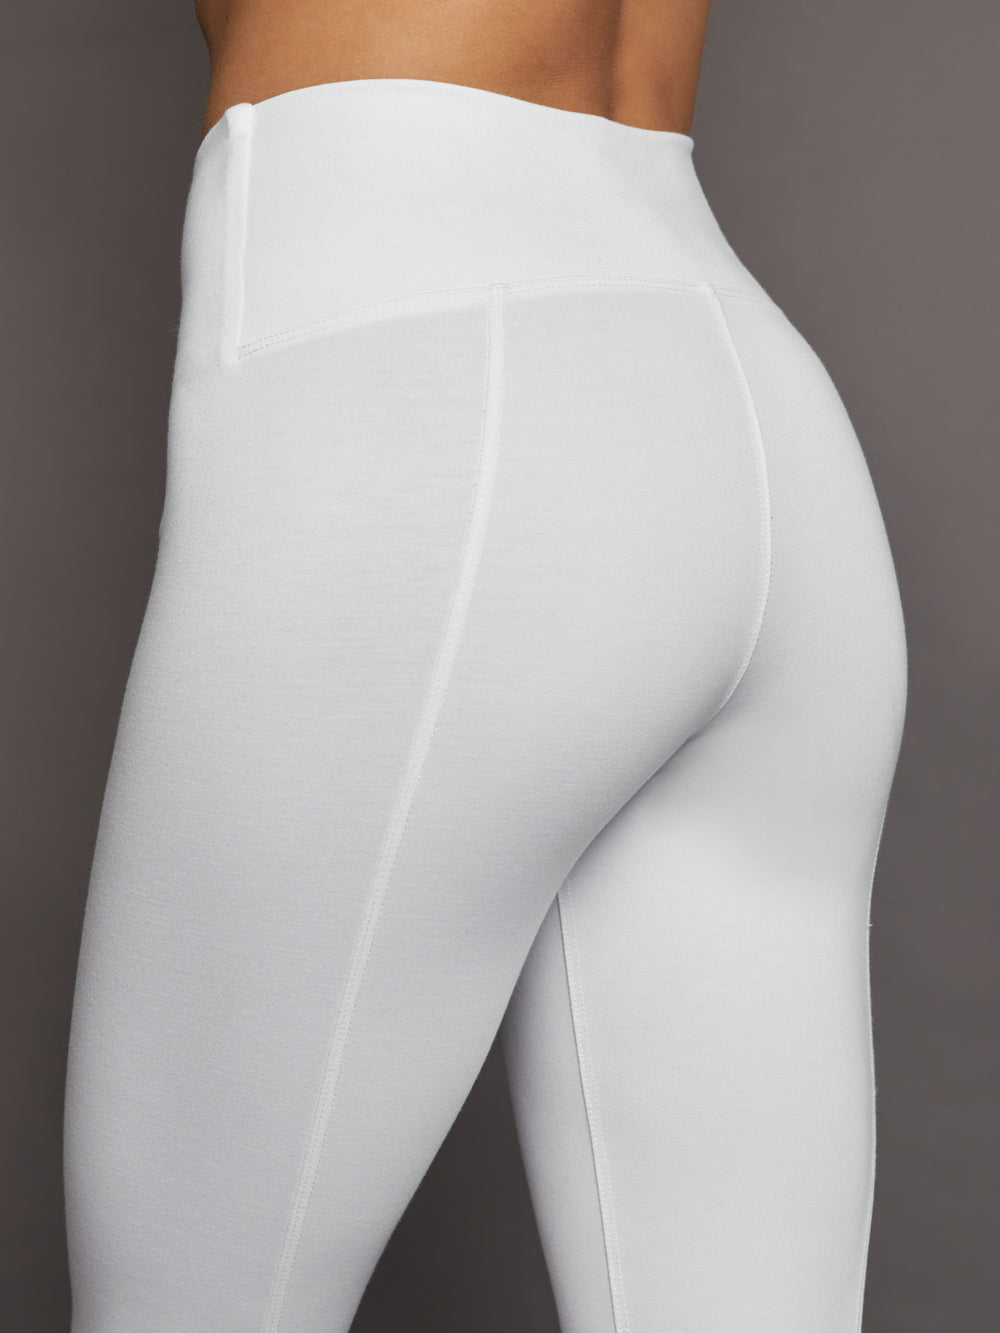 Zara Women's Ribbed Stirrup Silver Grey Pull On Pants Leggings L Straps